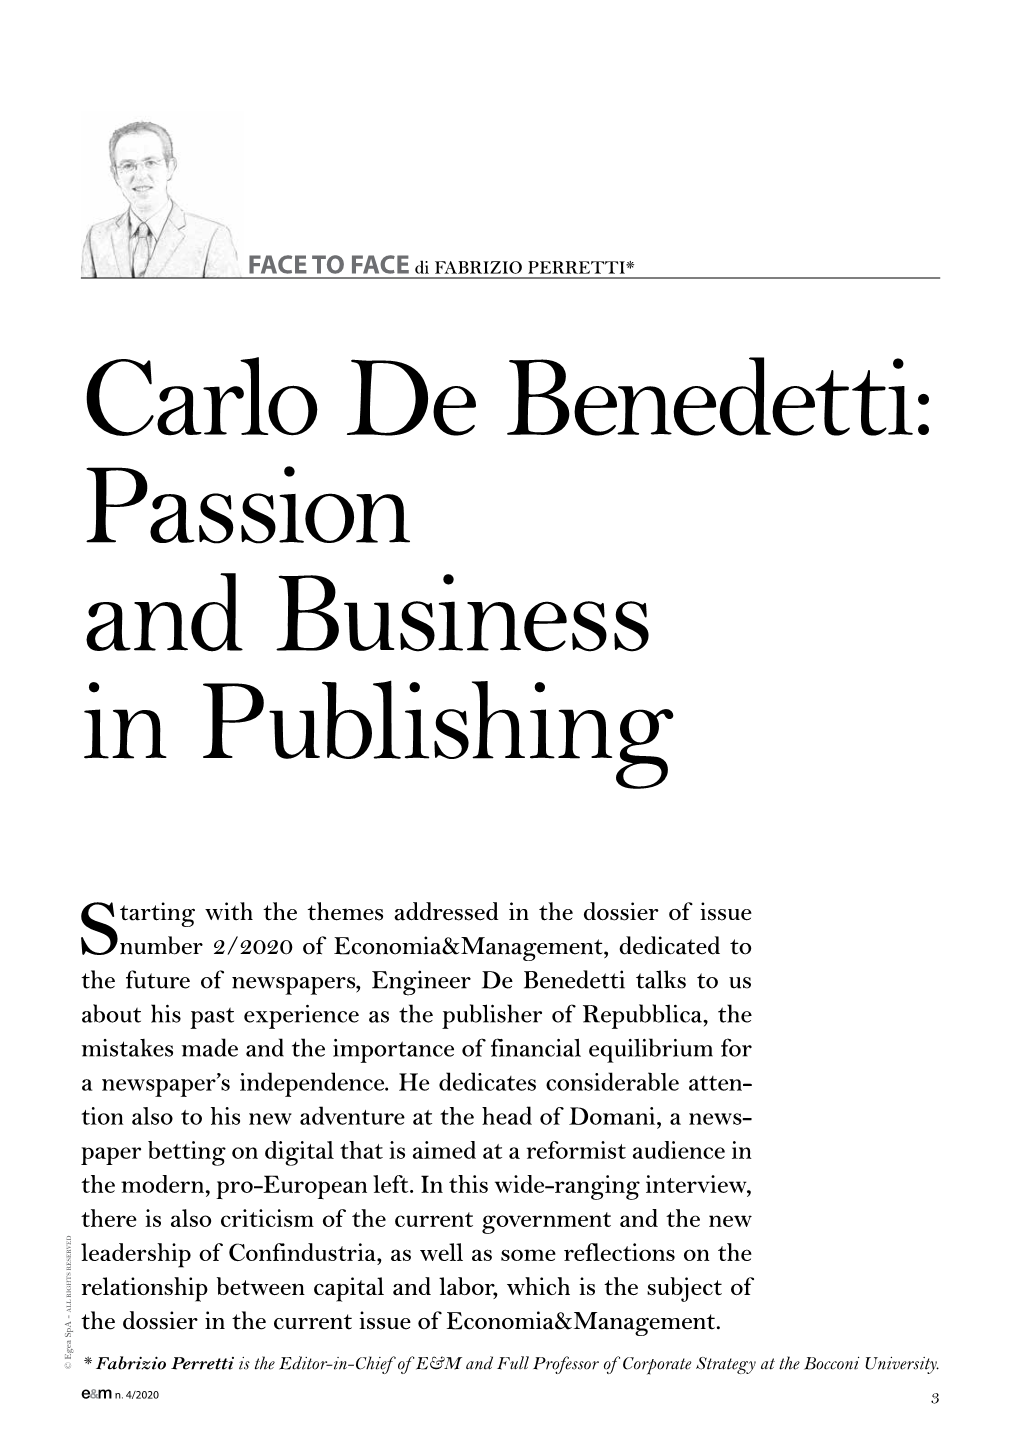 Carlo De Benedetti: Passion and Business in Publishing